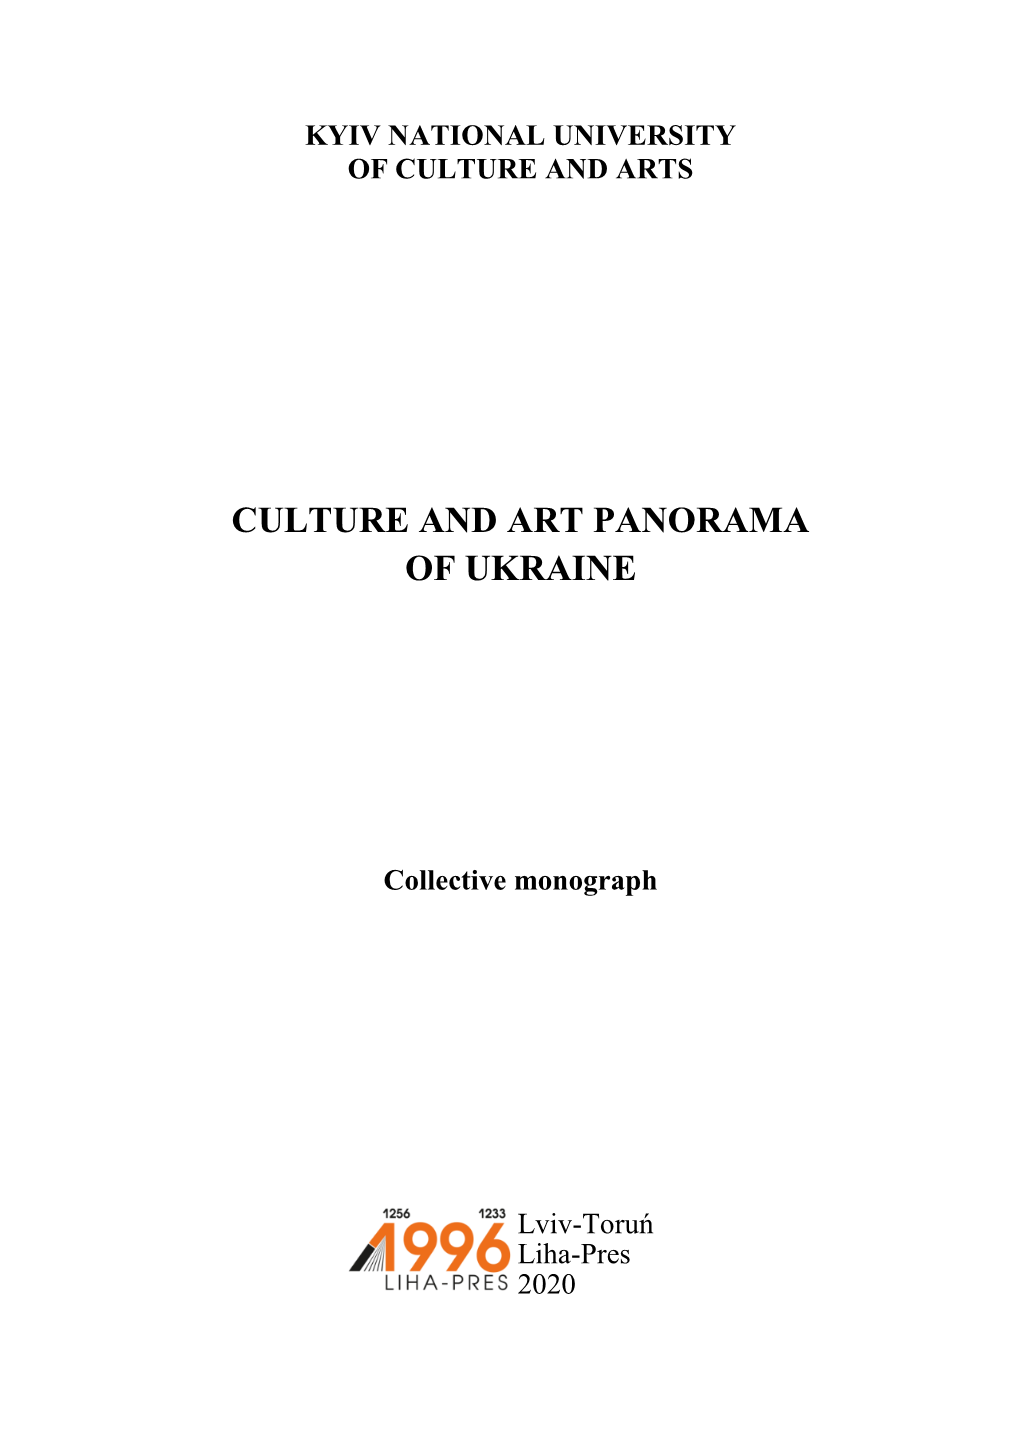 Culture and Art Panorama of Ukraine